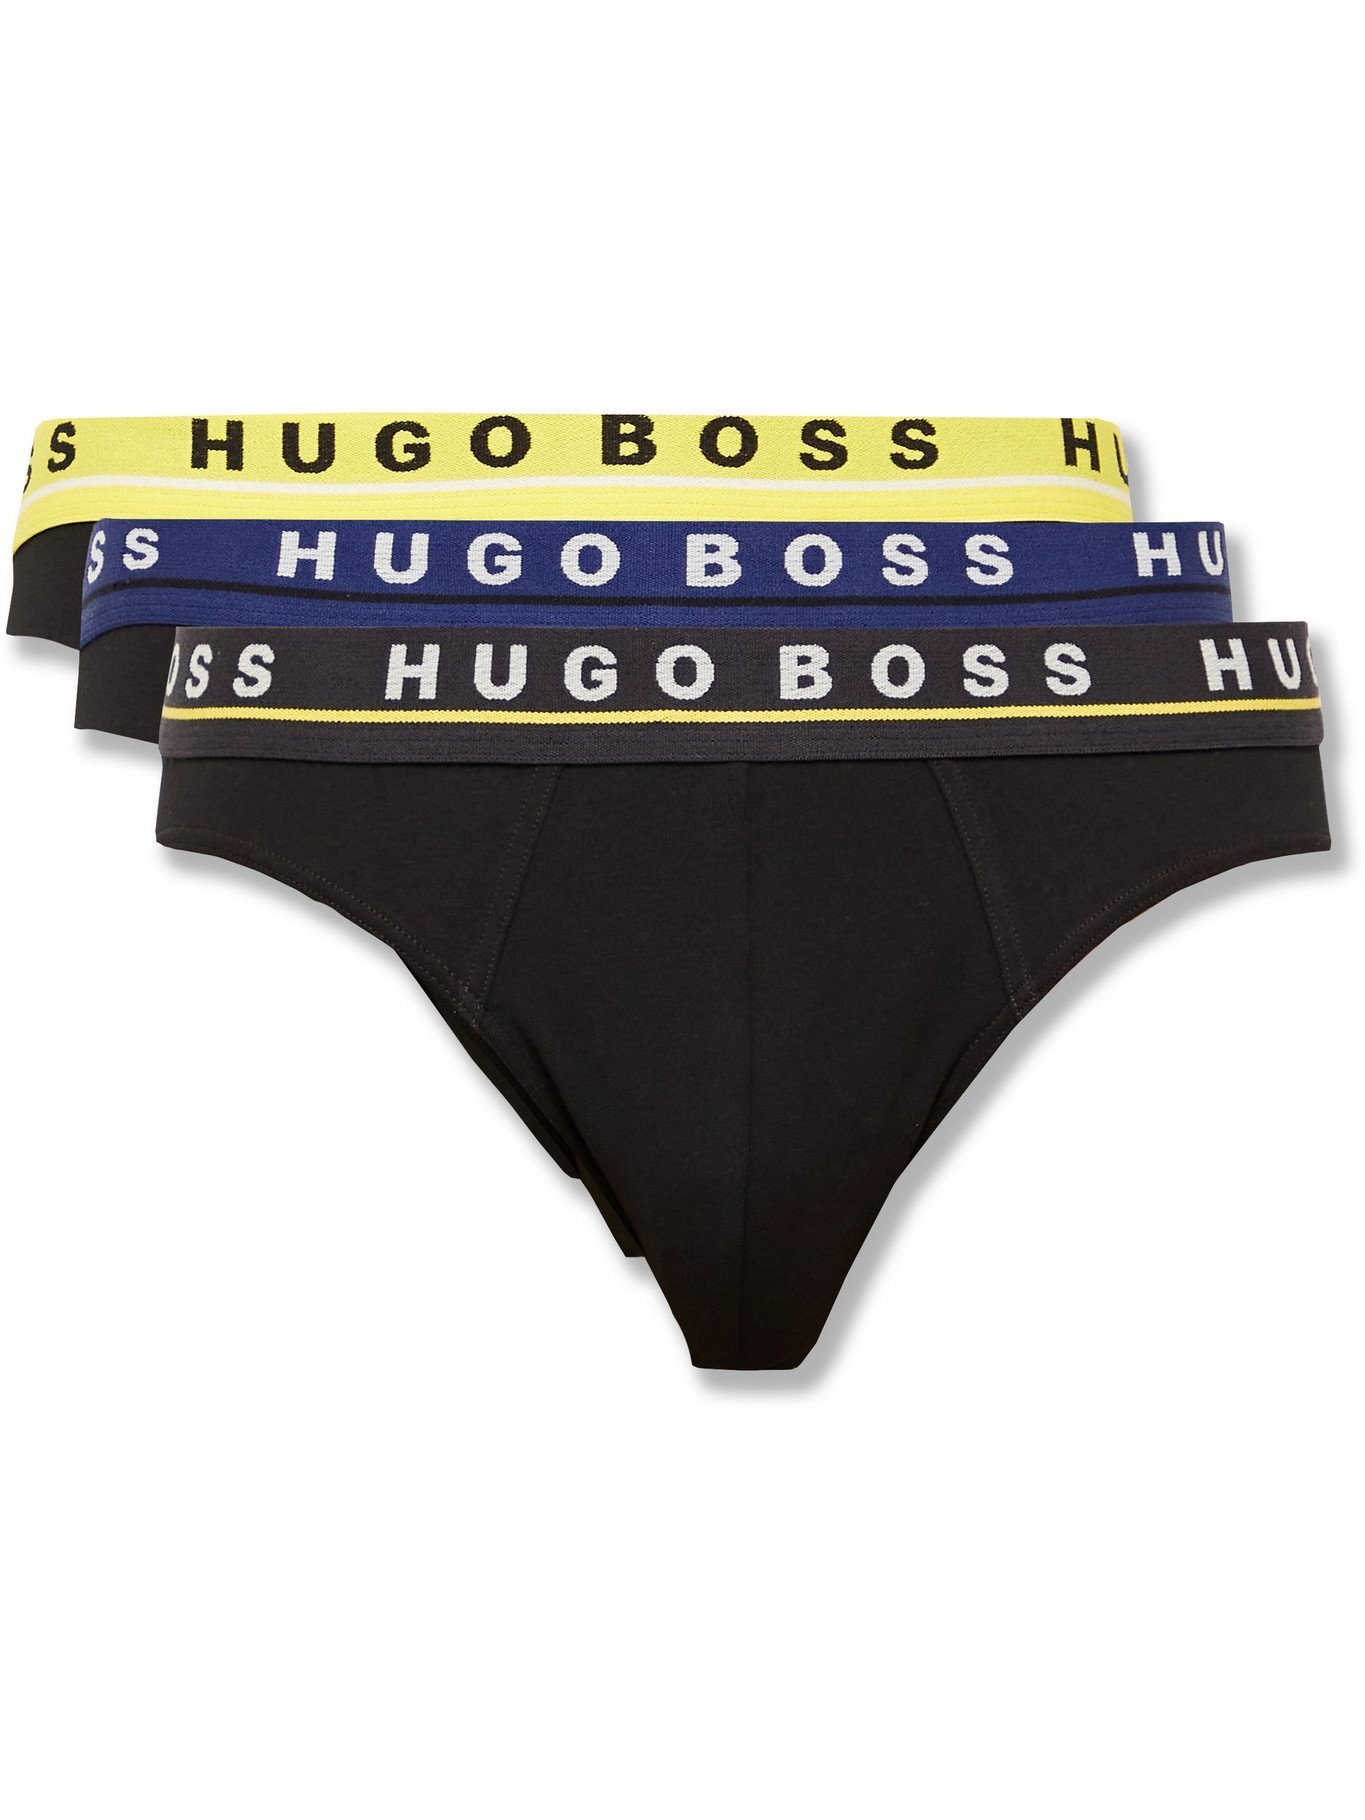 HUGO BOSS - Three-Pack Stretch-Cotton Briefs - Multi - M Hugo Boss